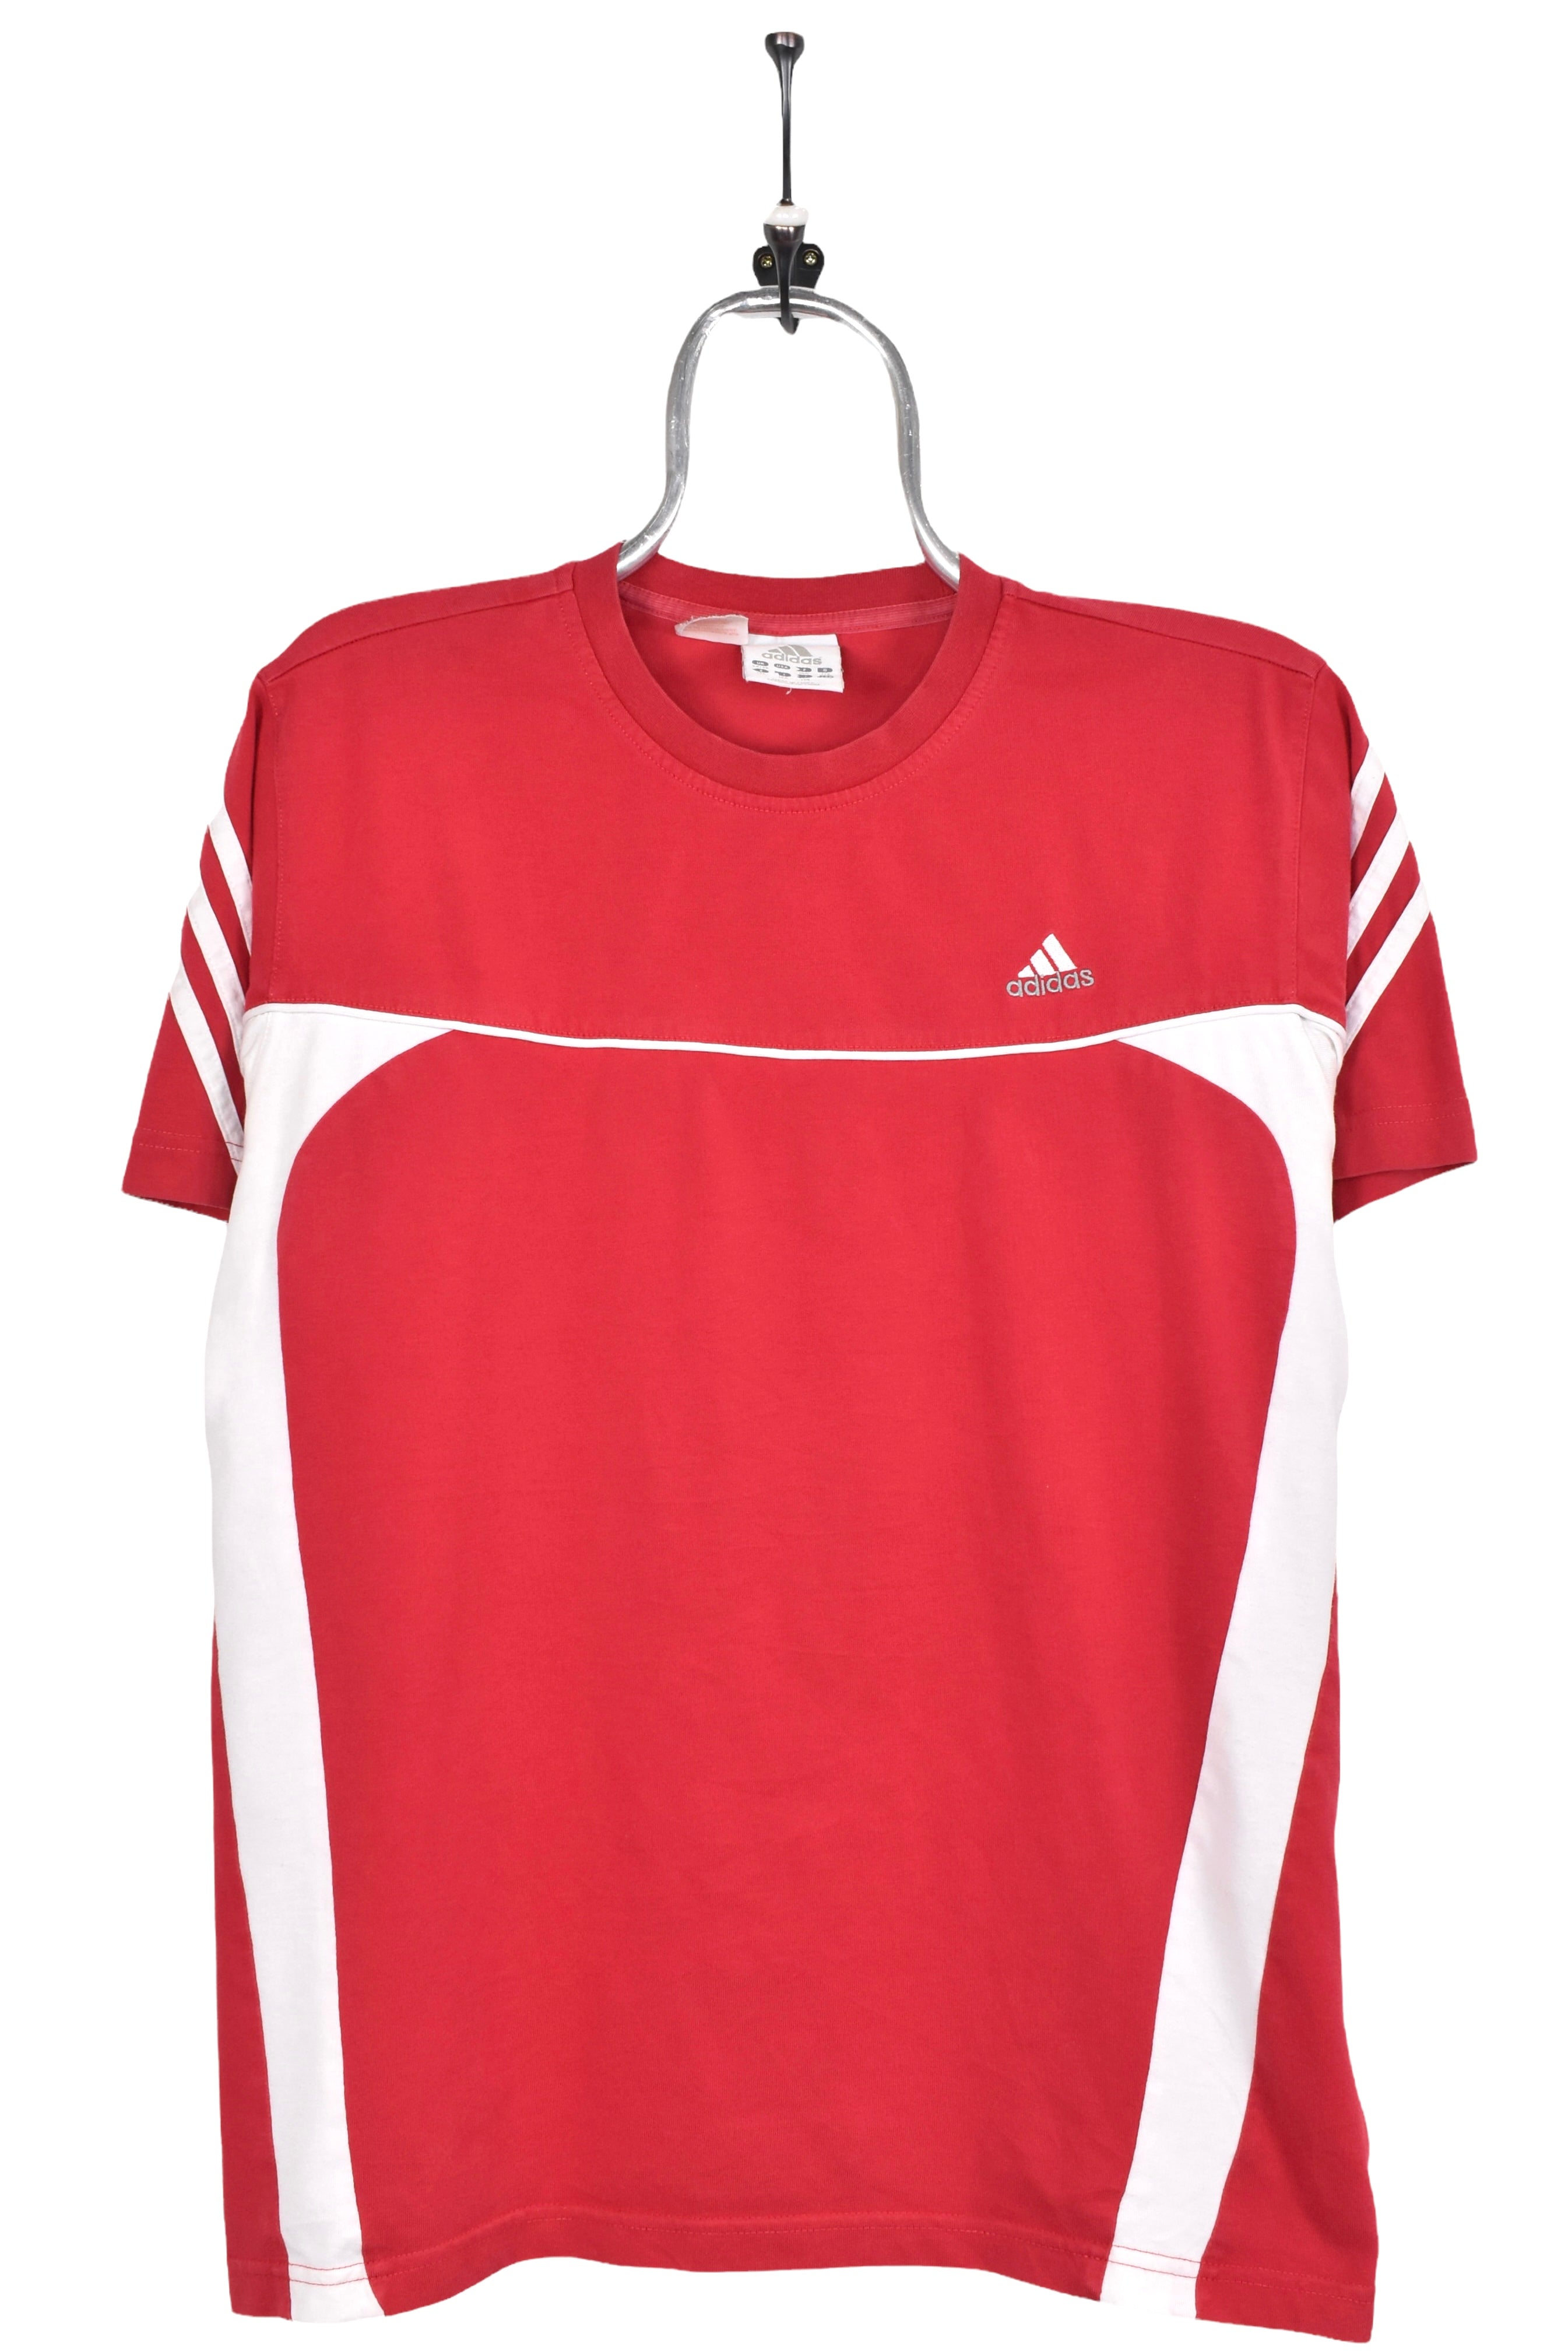 Vintage Adidas shirt, red embroidered tee - AU Small ADIDAS